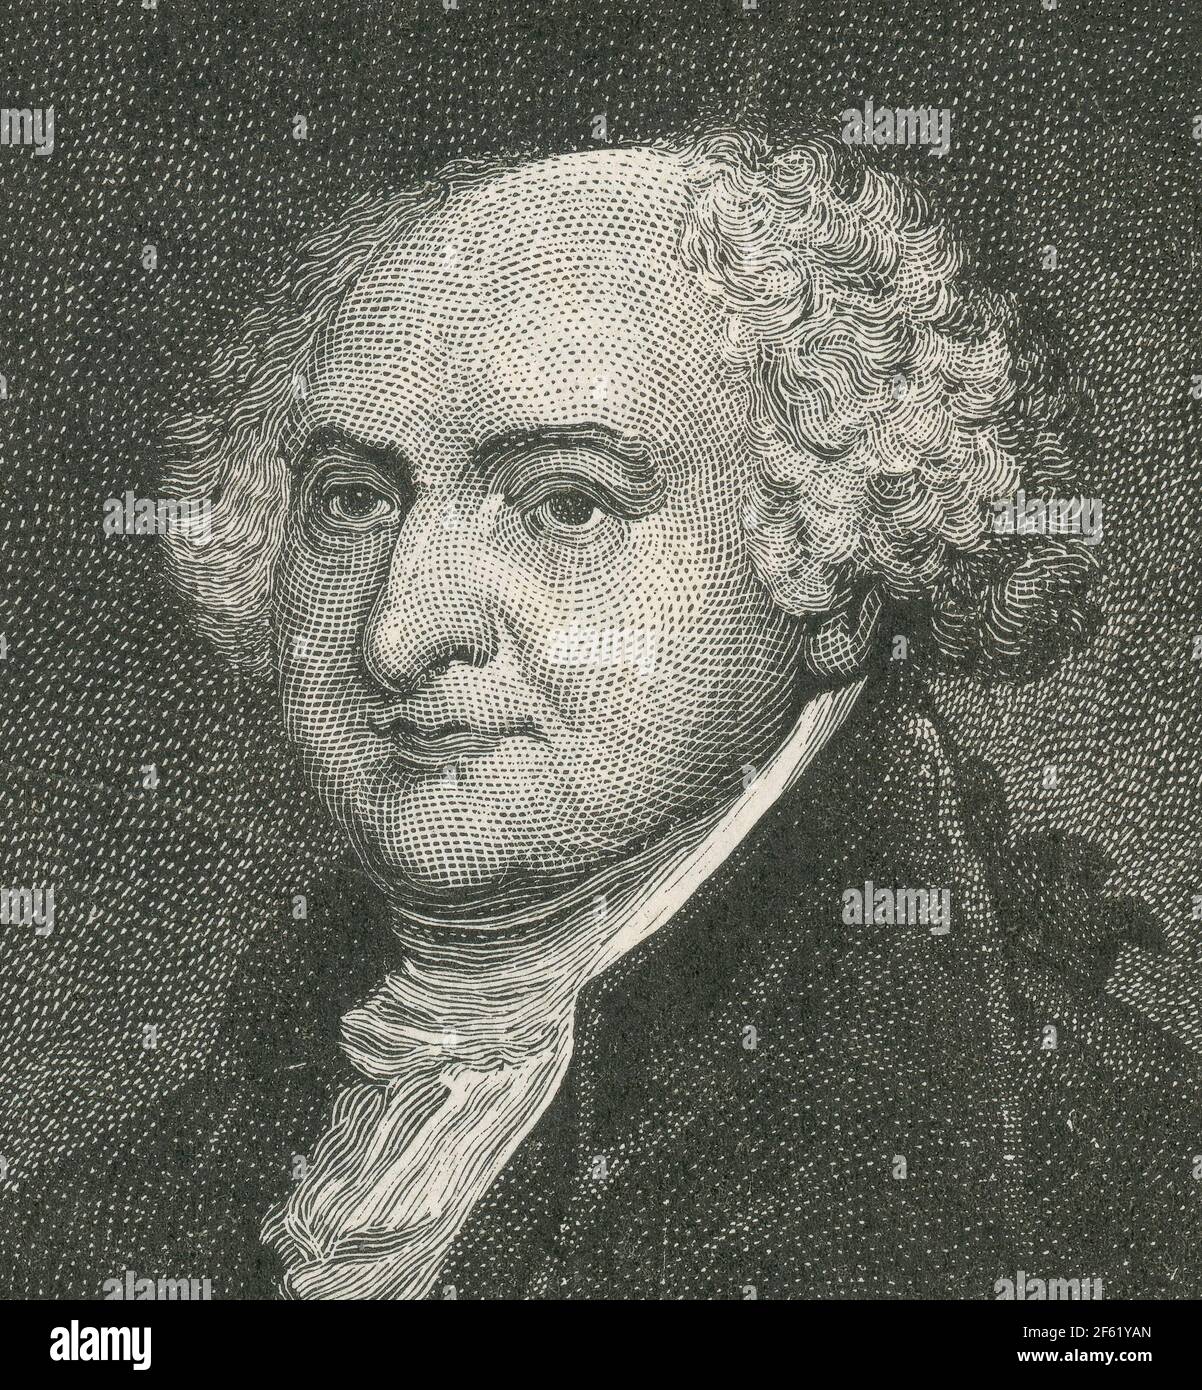 John Adams, 2nd U.S. President Stock Photo Alamy